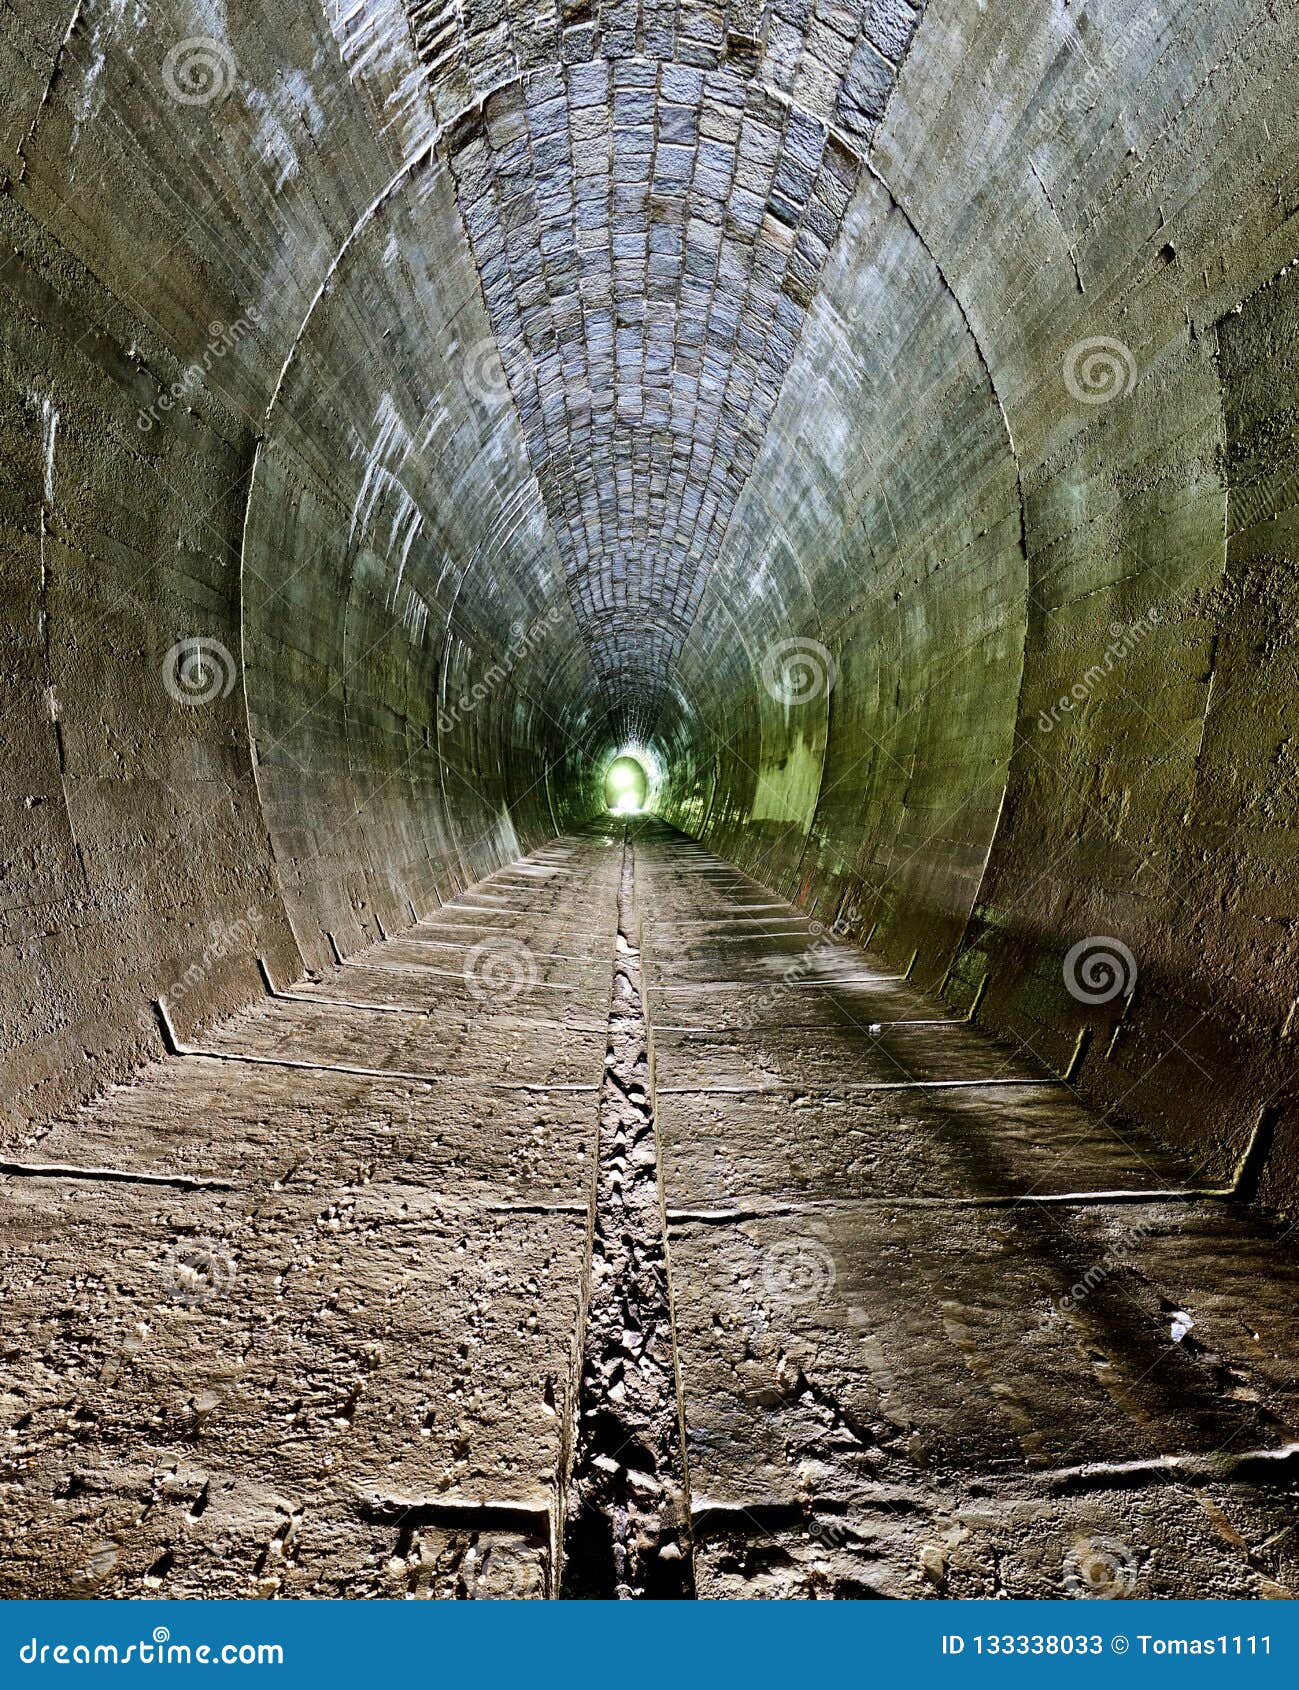 dark tunnel - nobody